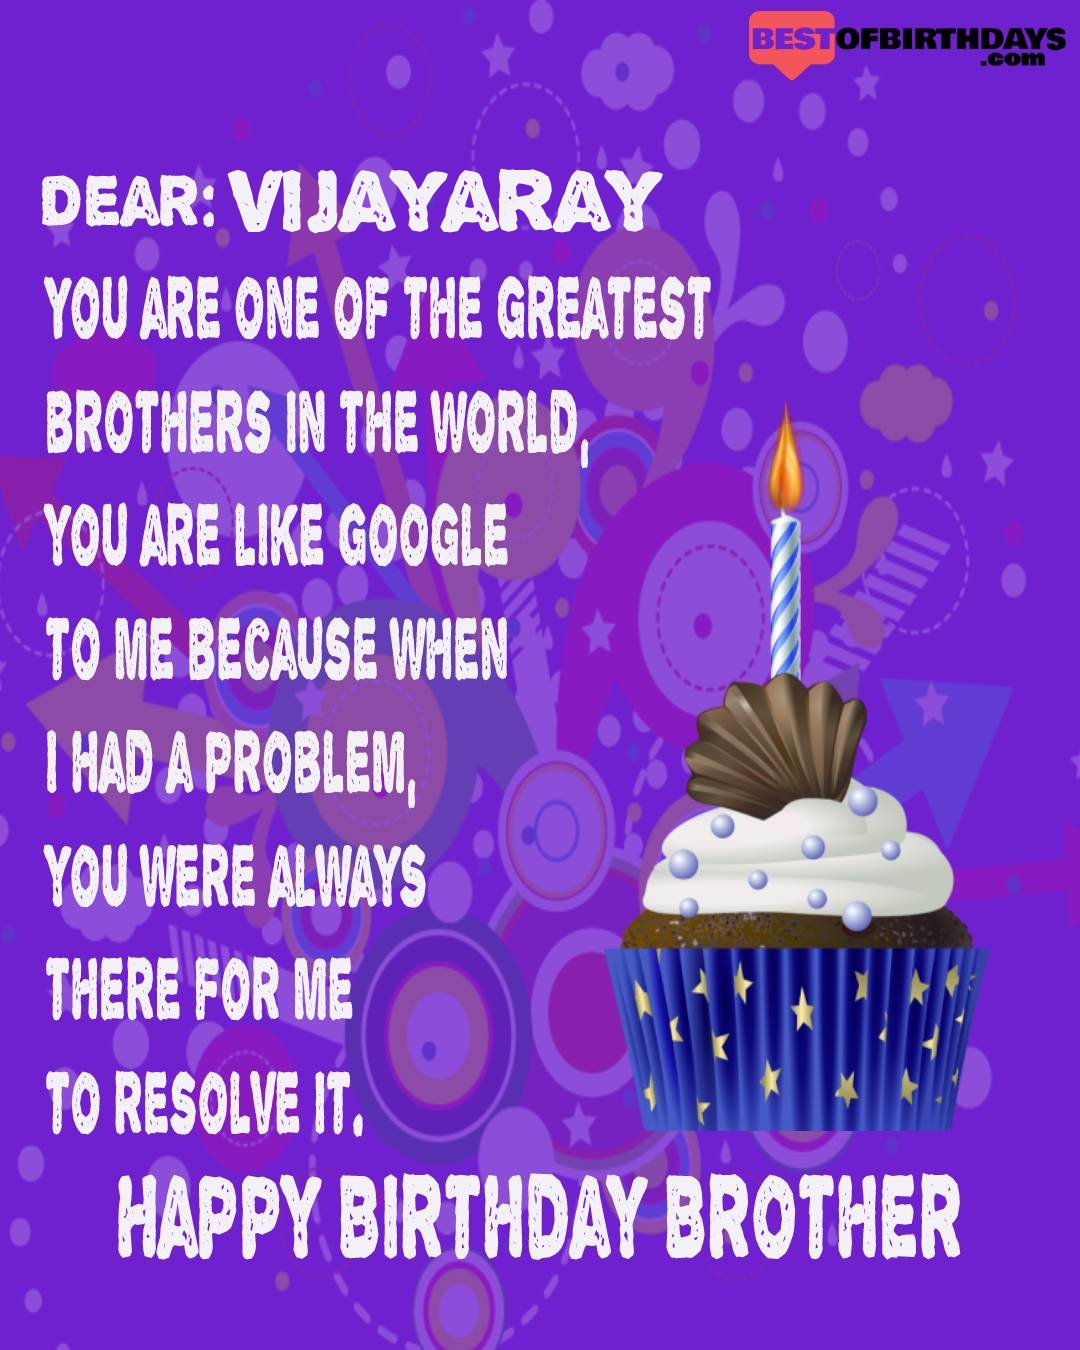 Happy birthday vijayaray bhai brother bro